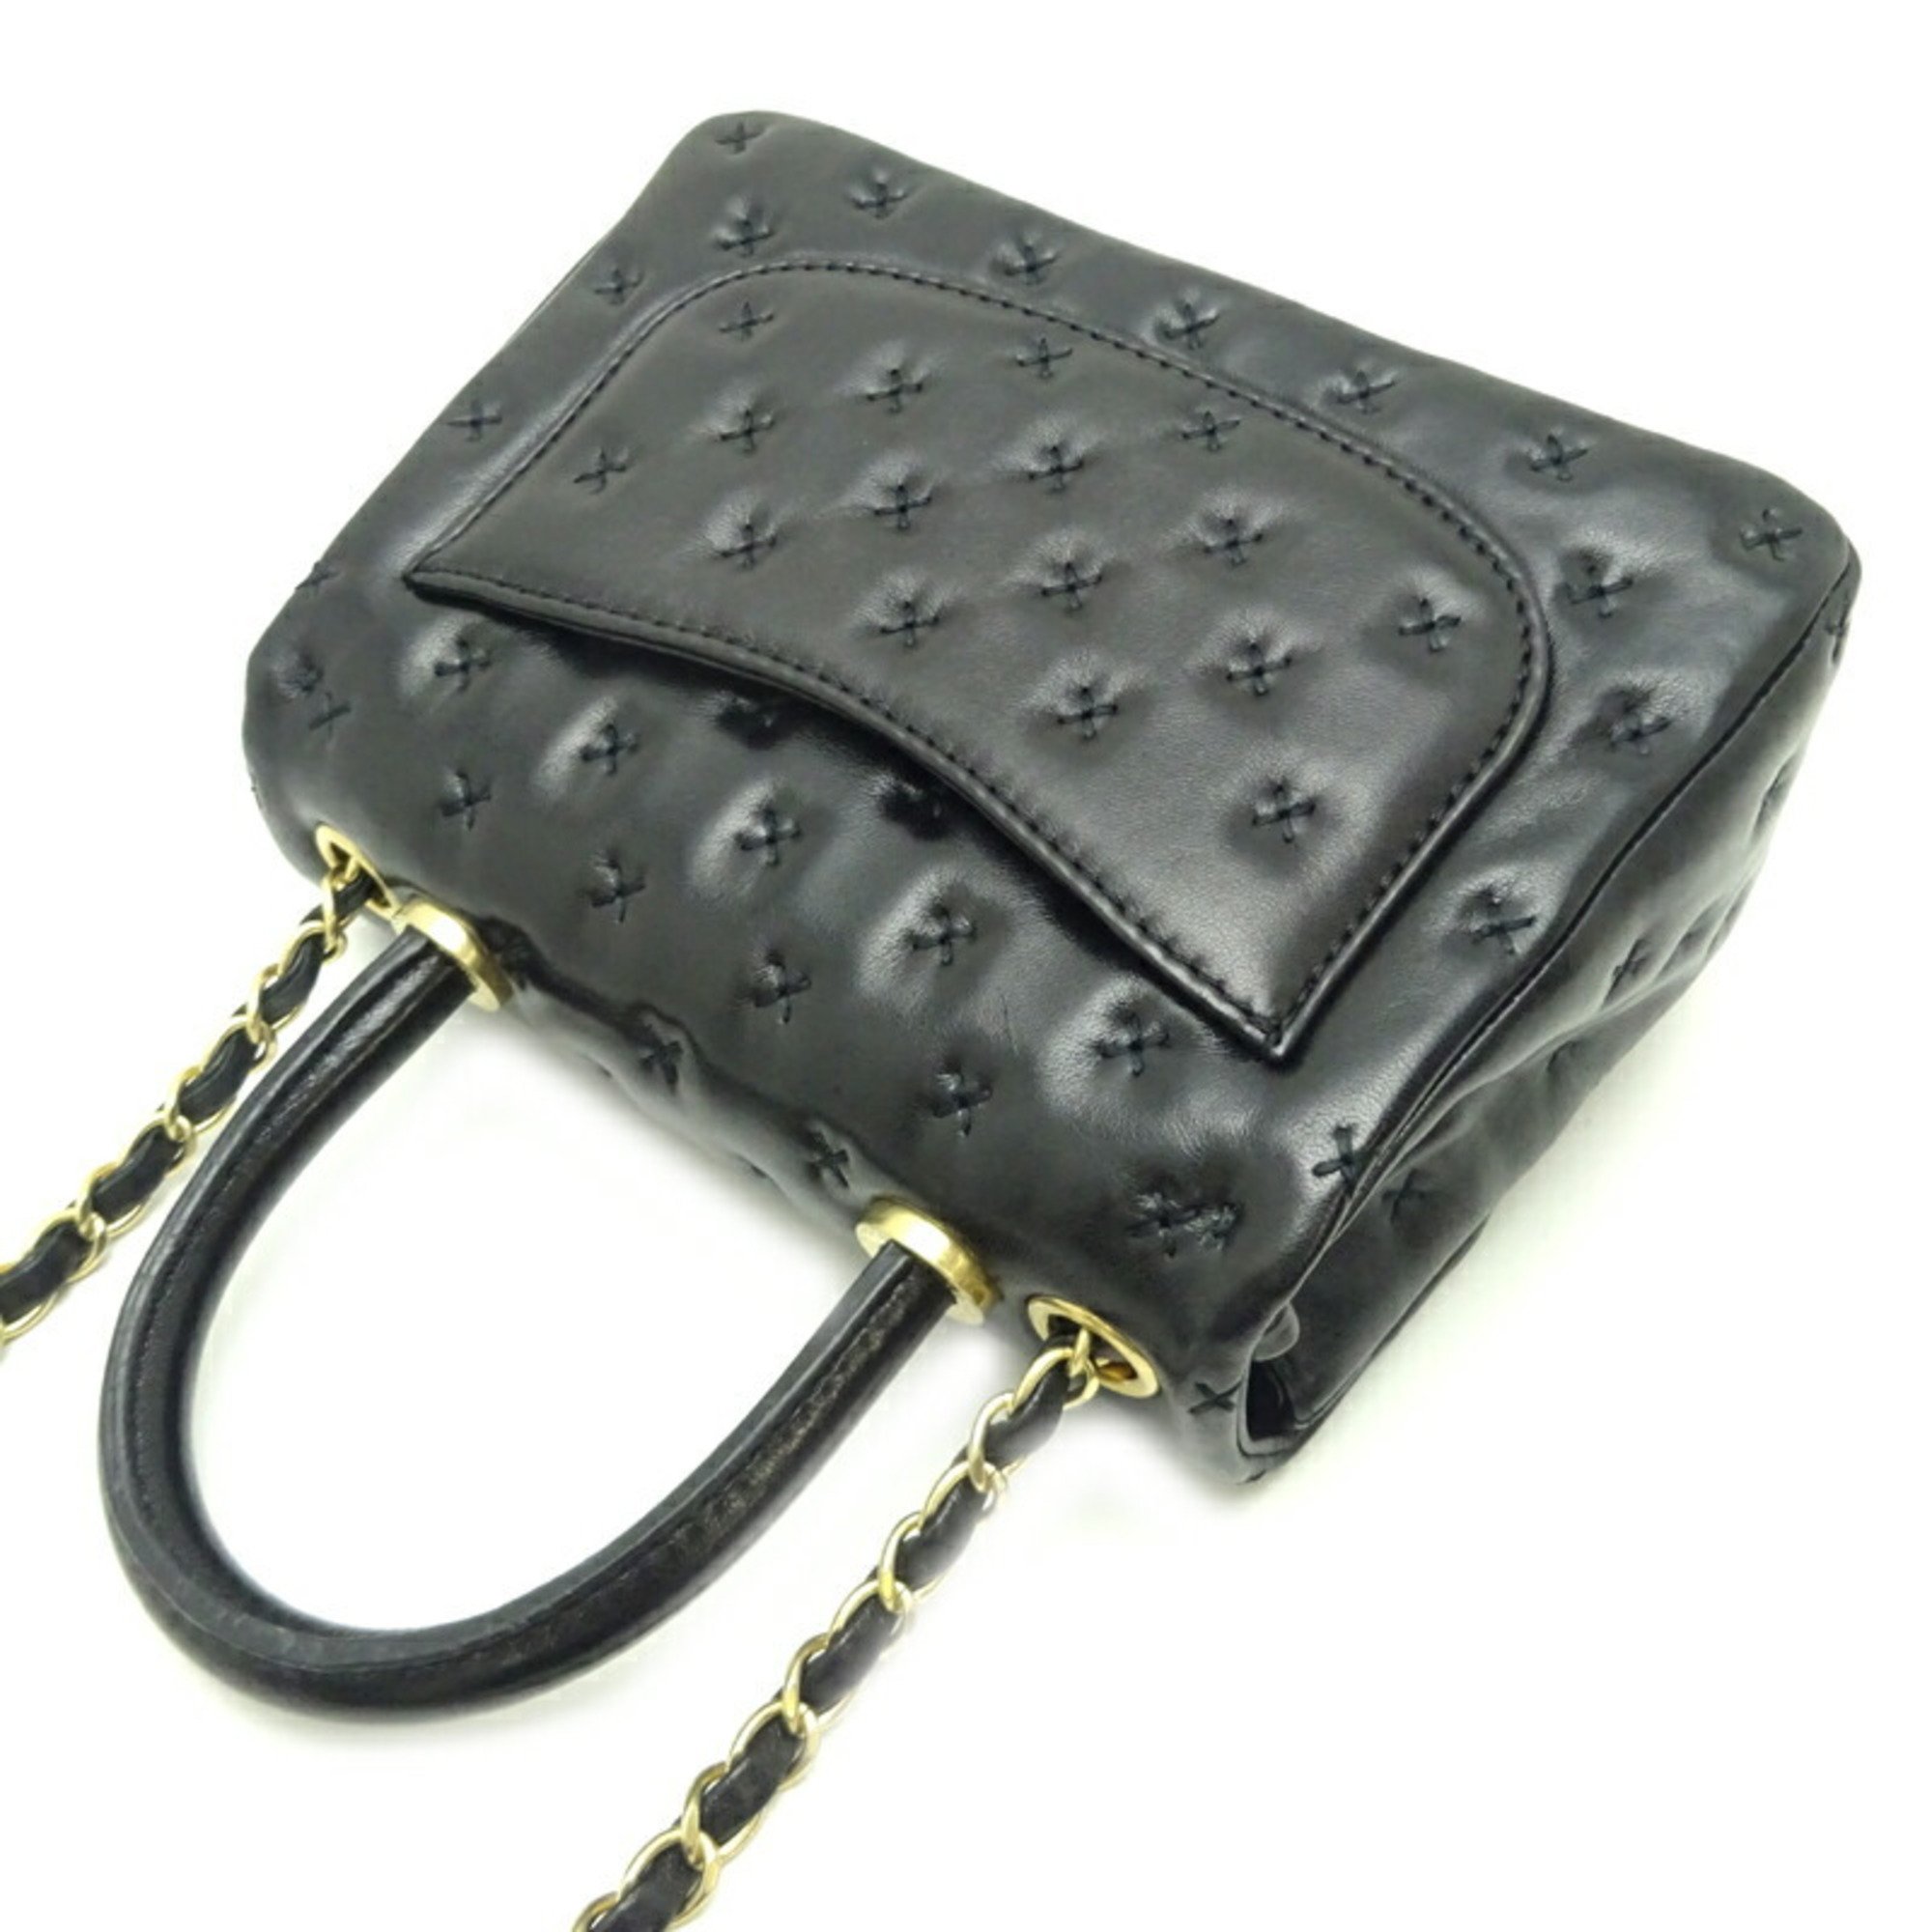 Chanel 2-Way Bag Women's Handbag A98724 Lambskin Black